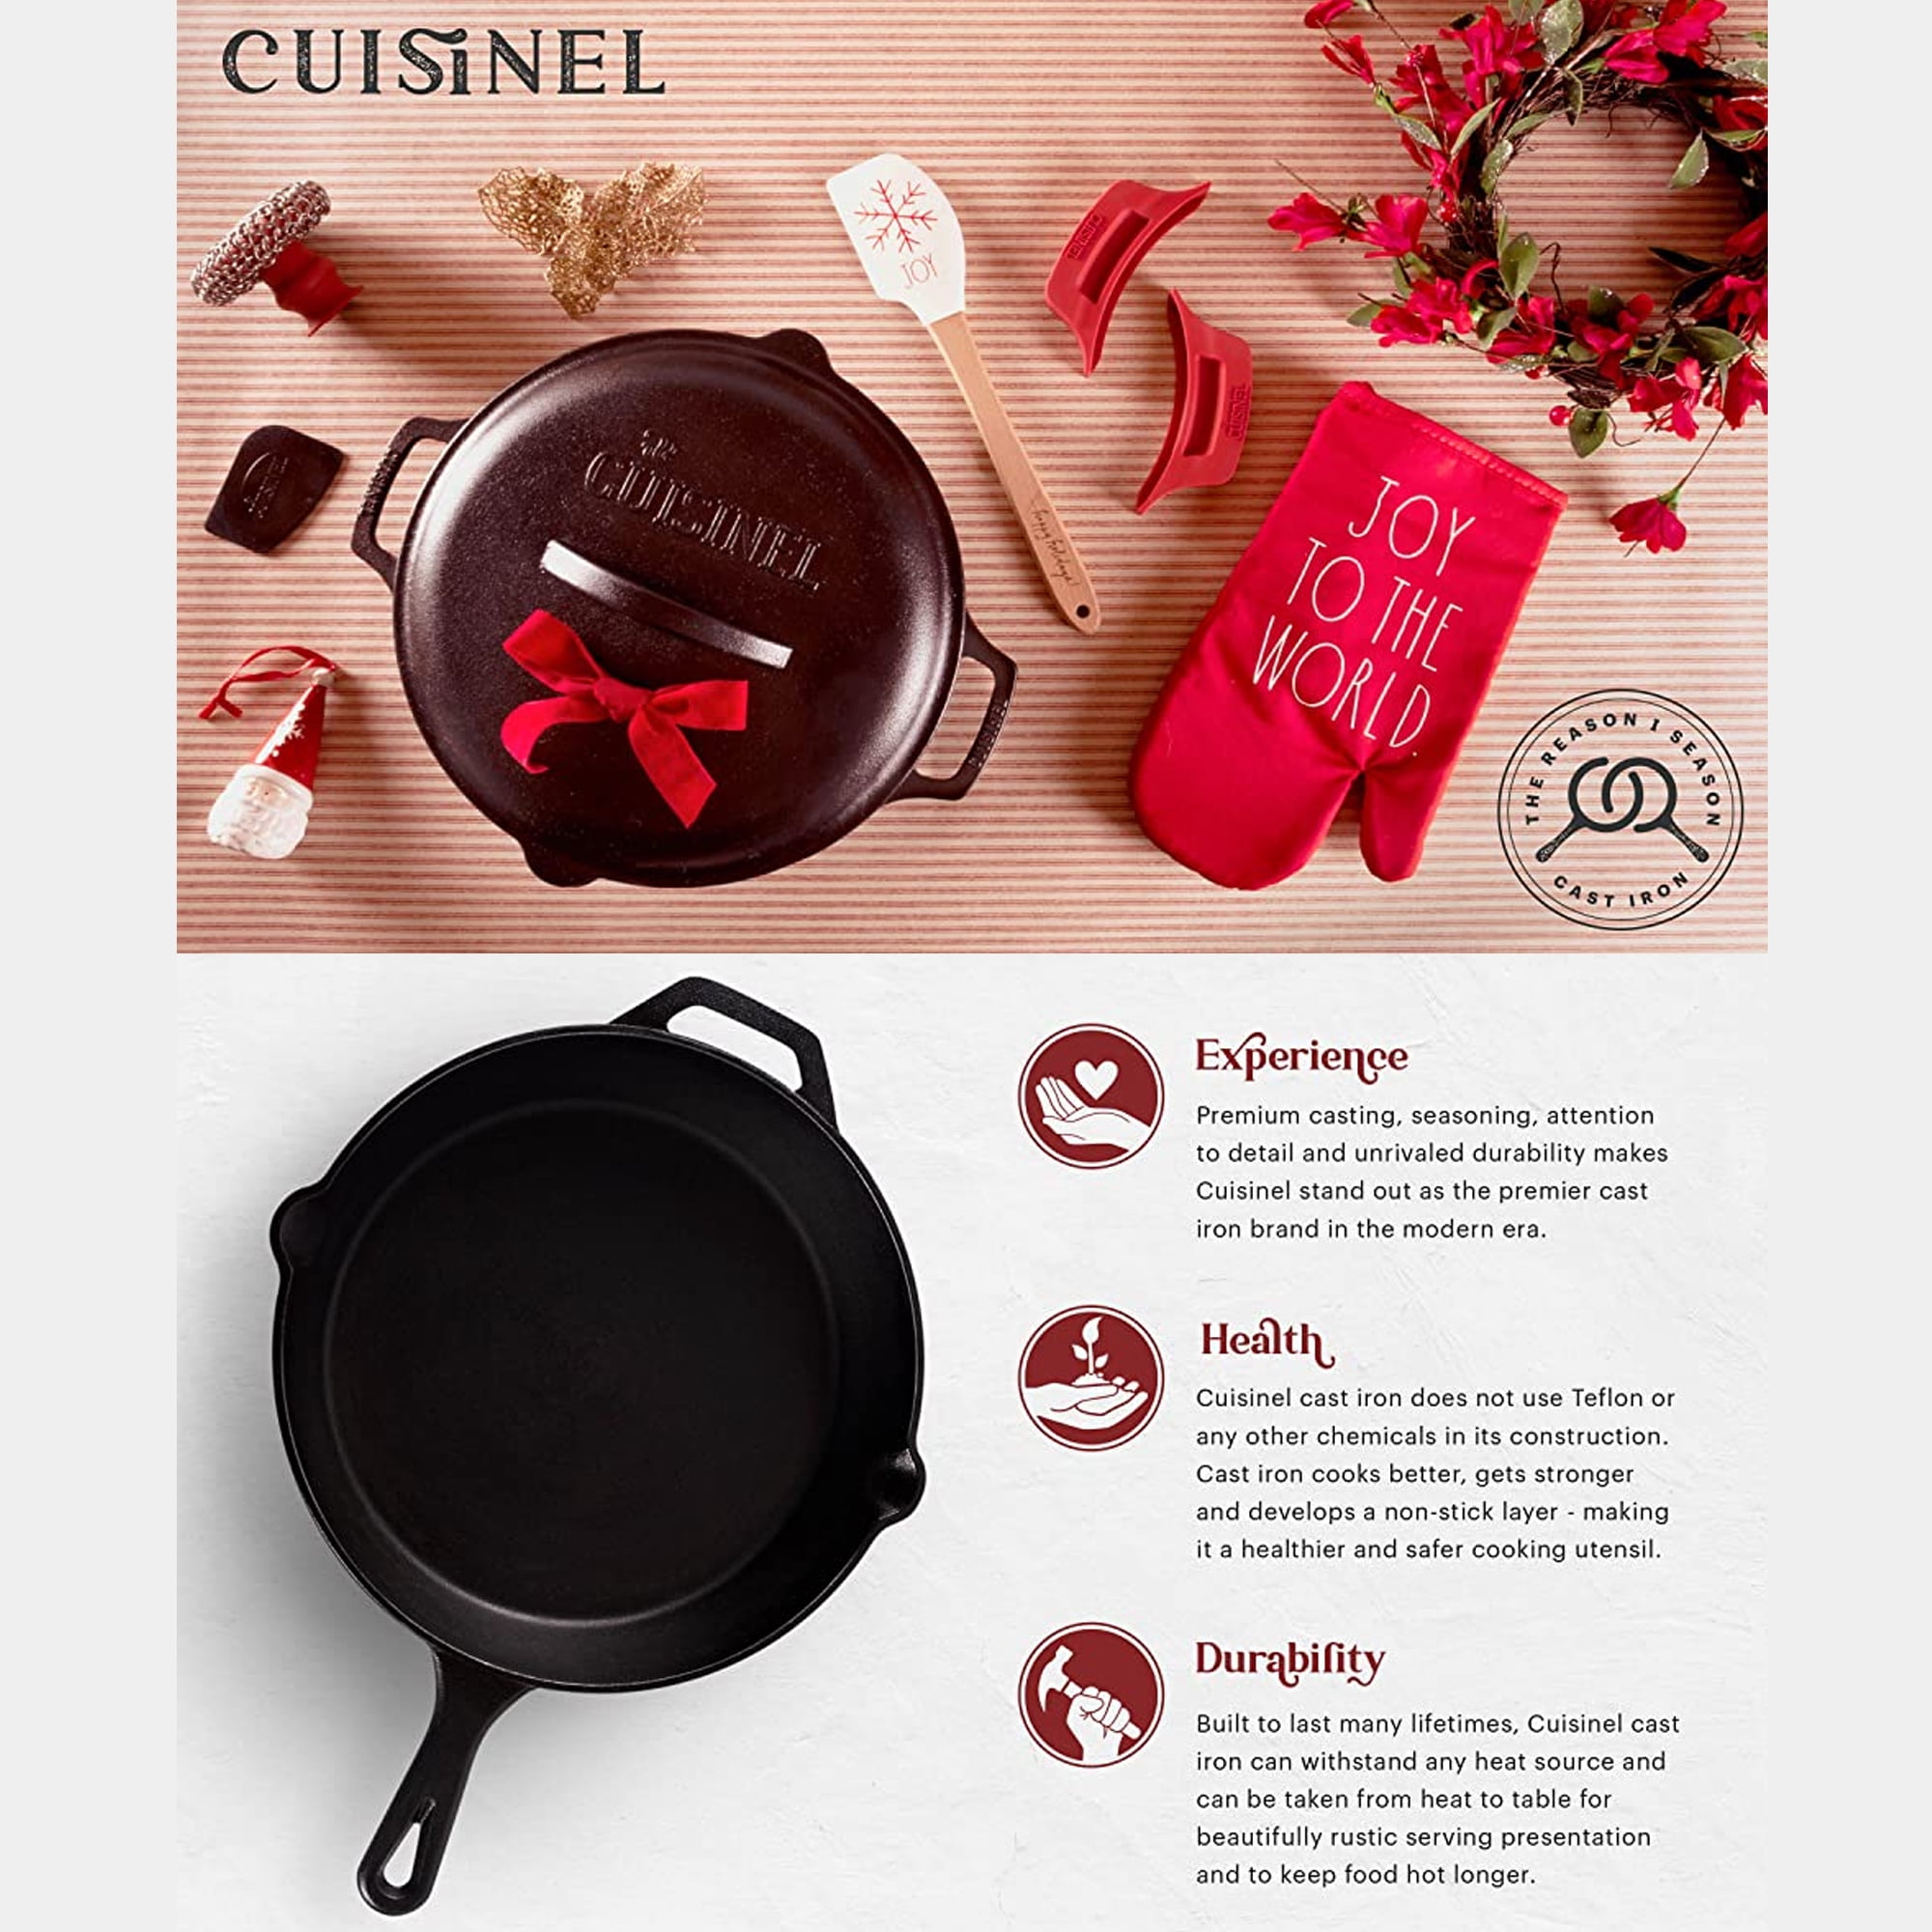 Cuisinel Versatile Pre-Seasoned Cast Iron Skillet 4 Multi-Sized Cooking Pan  Set 